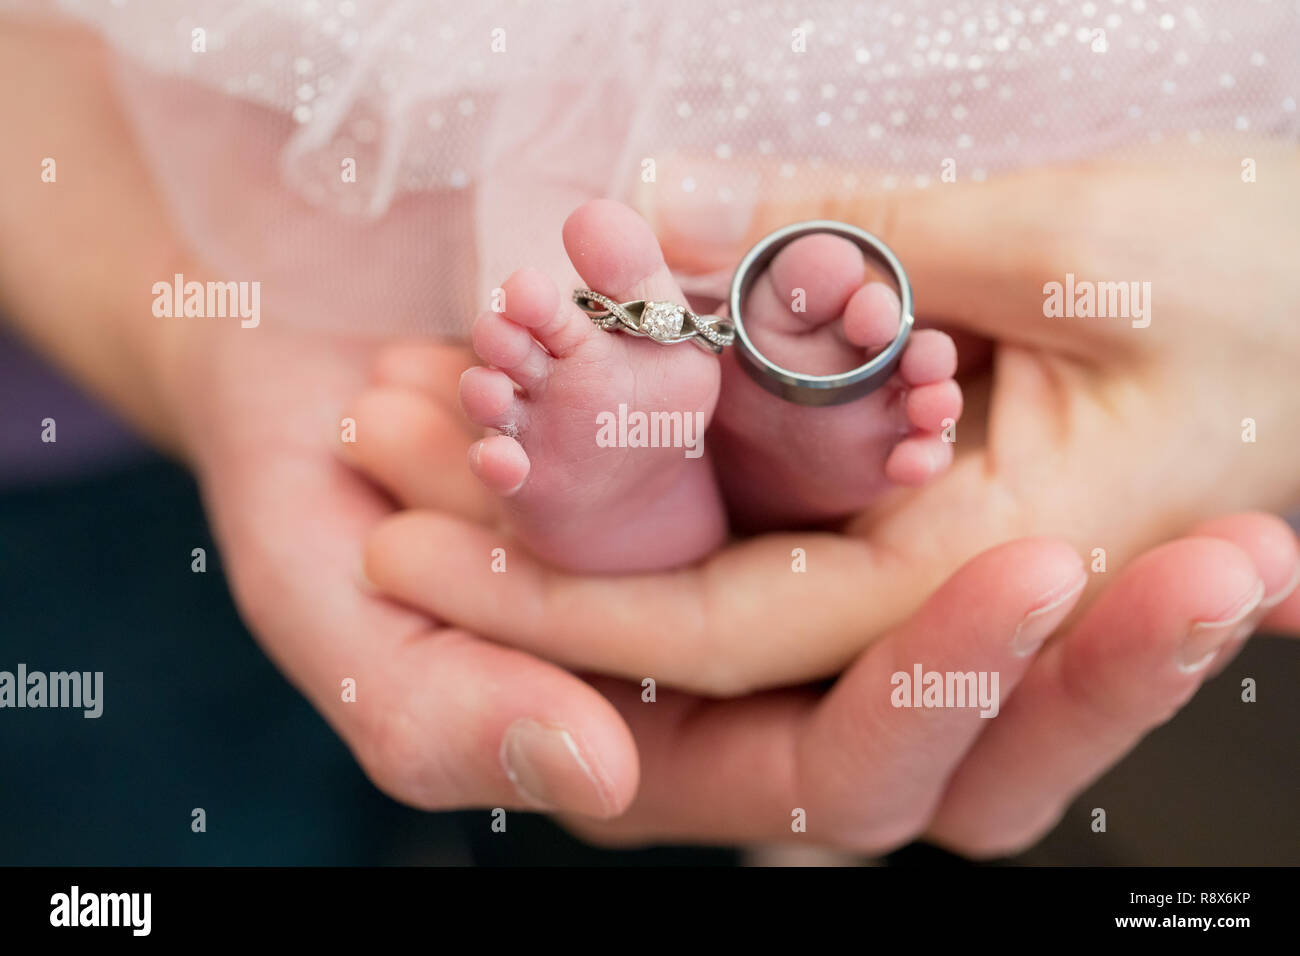 Newborn photo with wedding rings